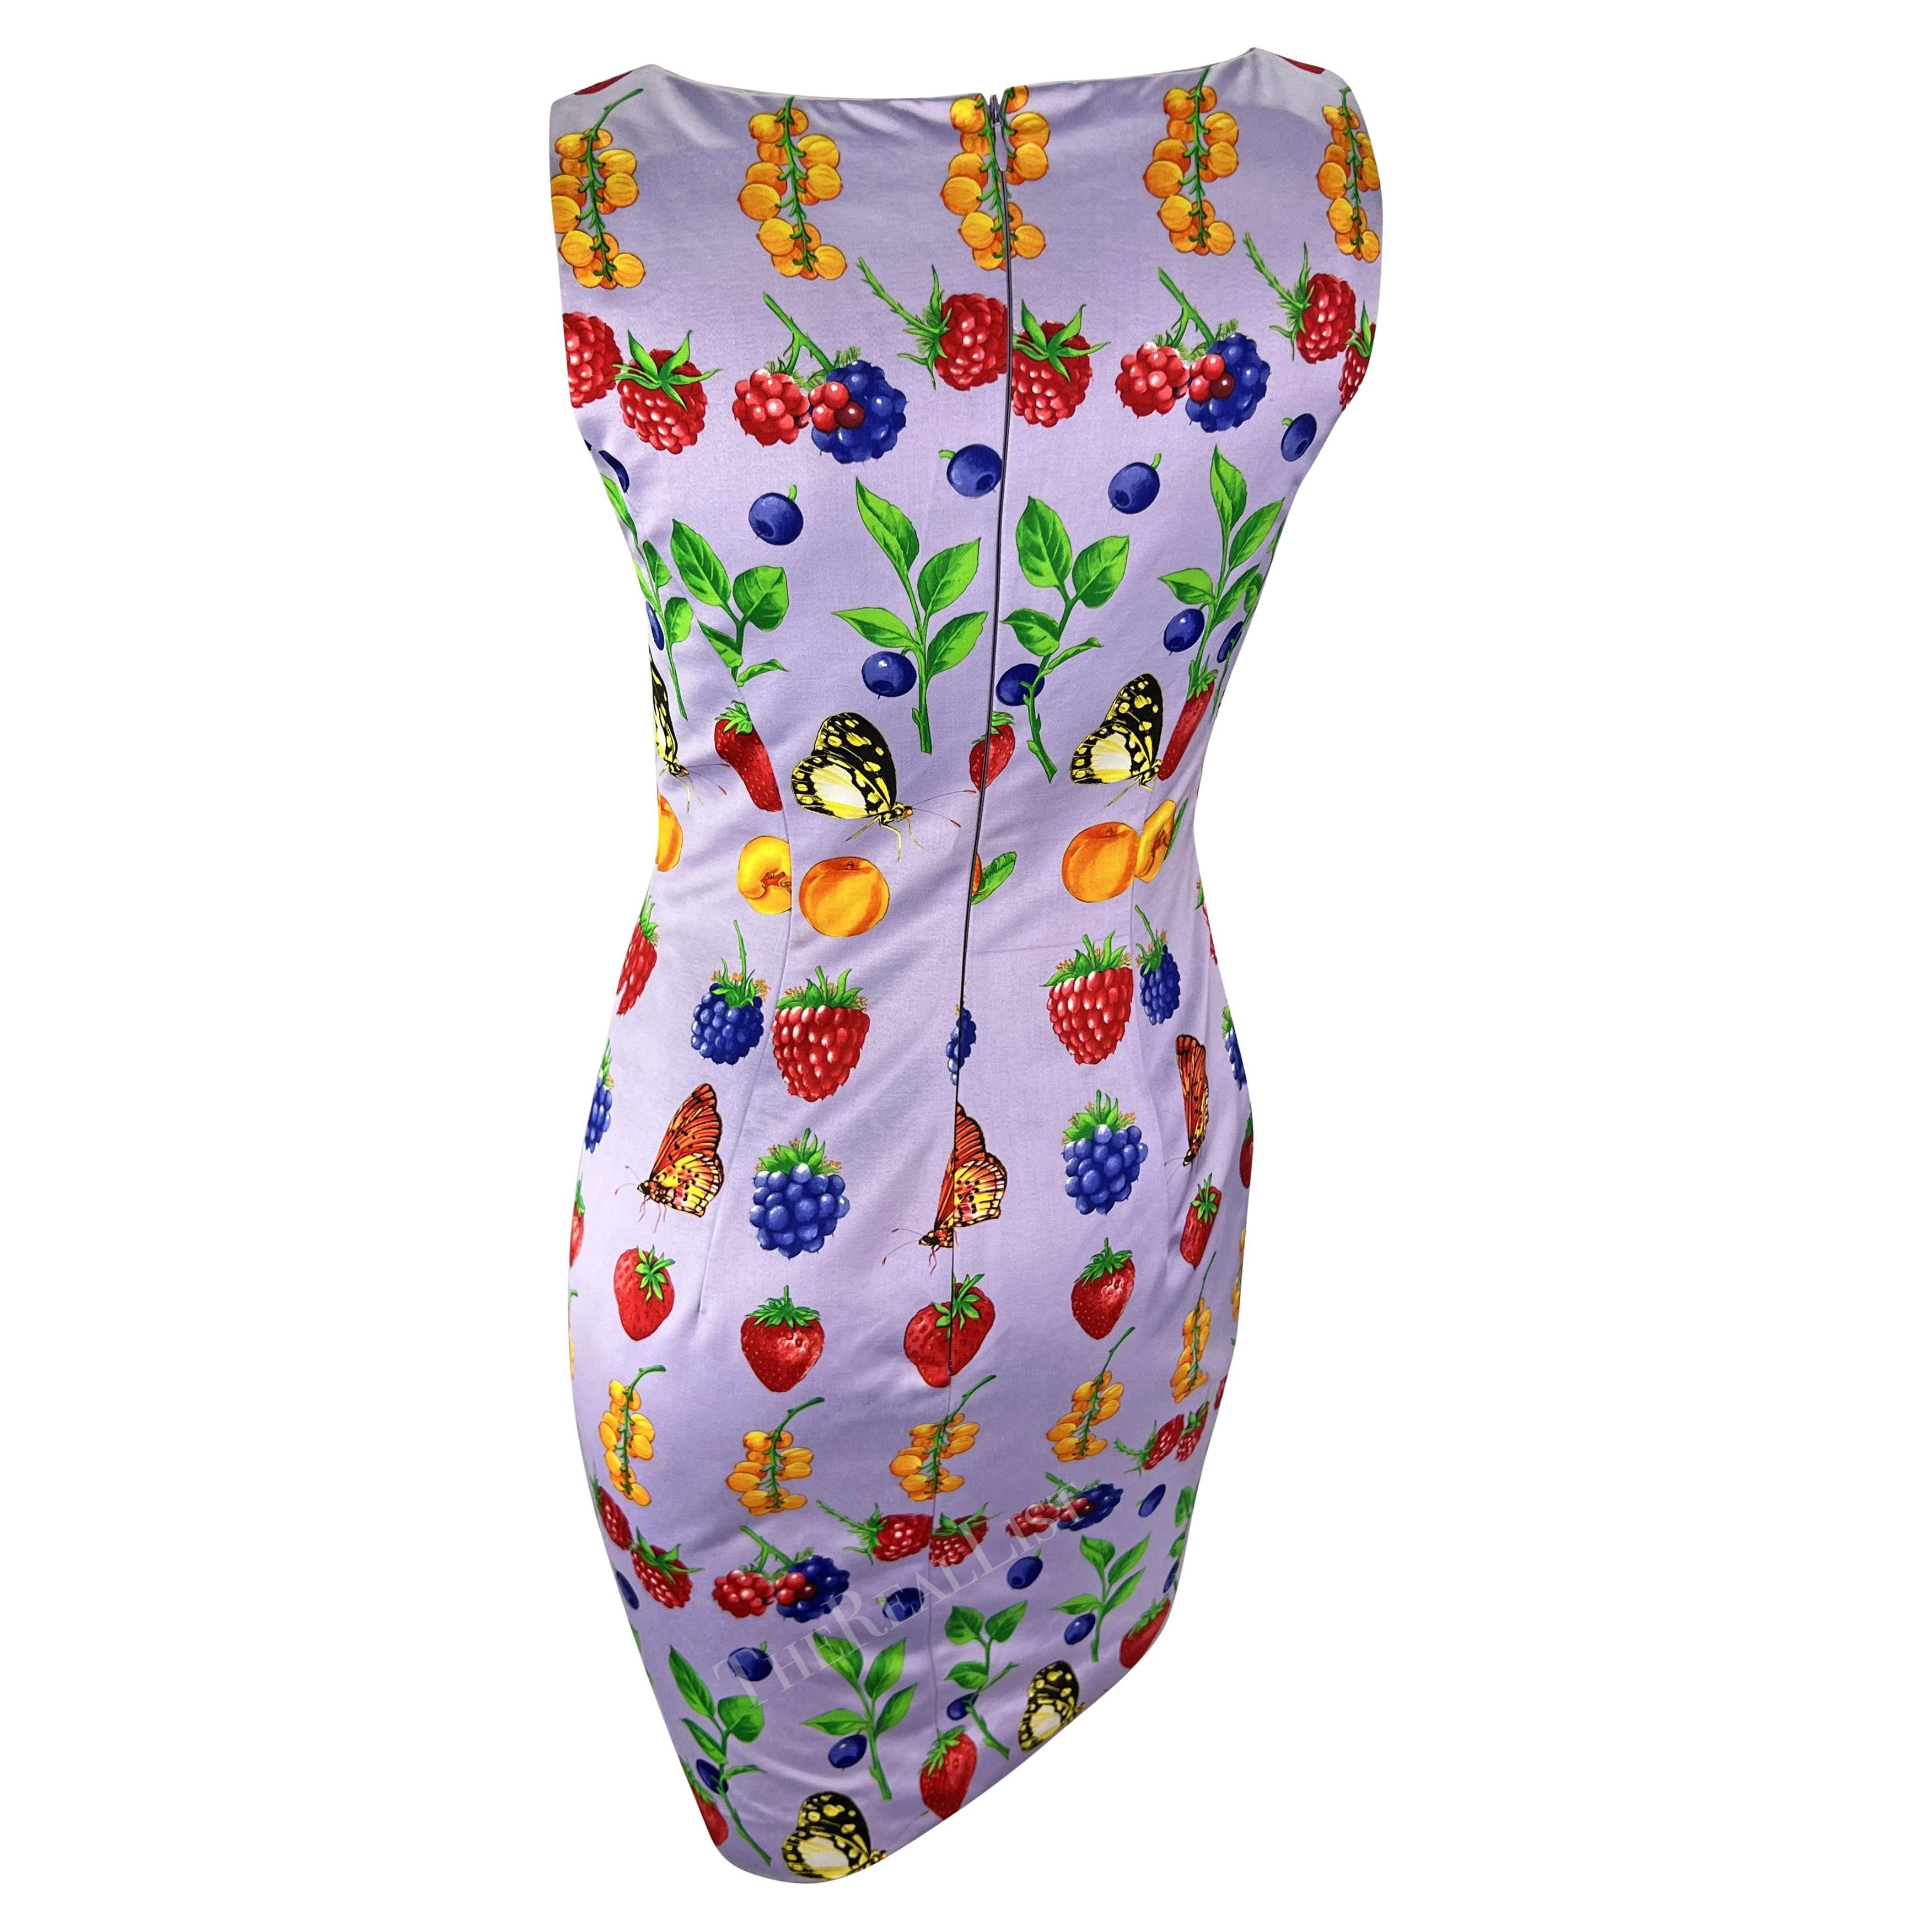 Women's S/S 1995 Gianni Versace Butterfly Berry Garden Print Lavender Pencil Dress For Sale